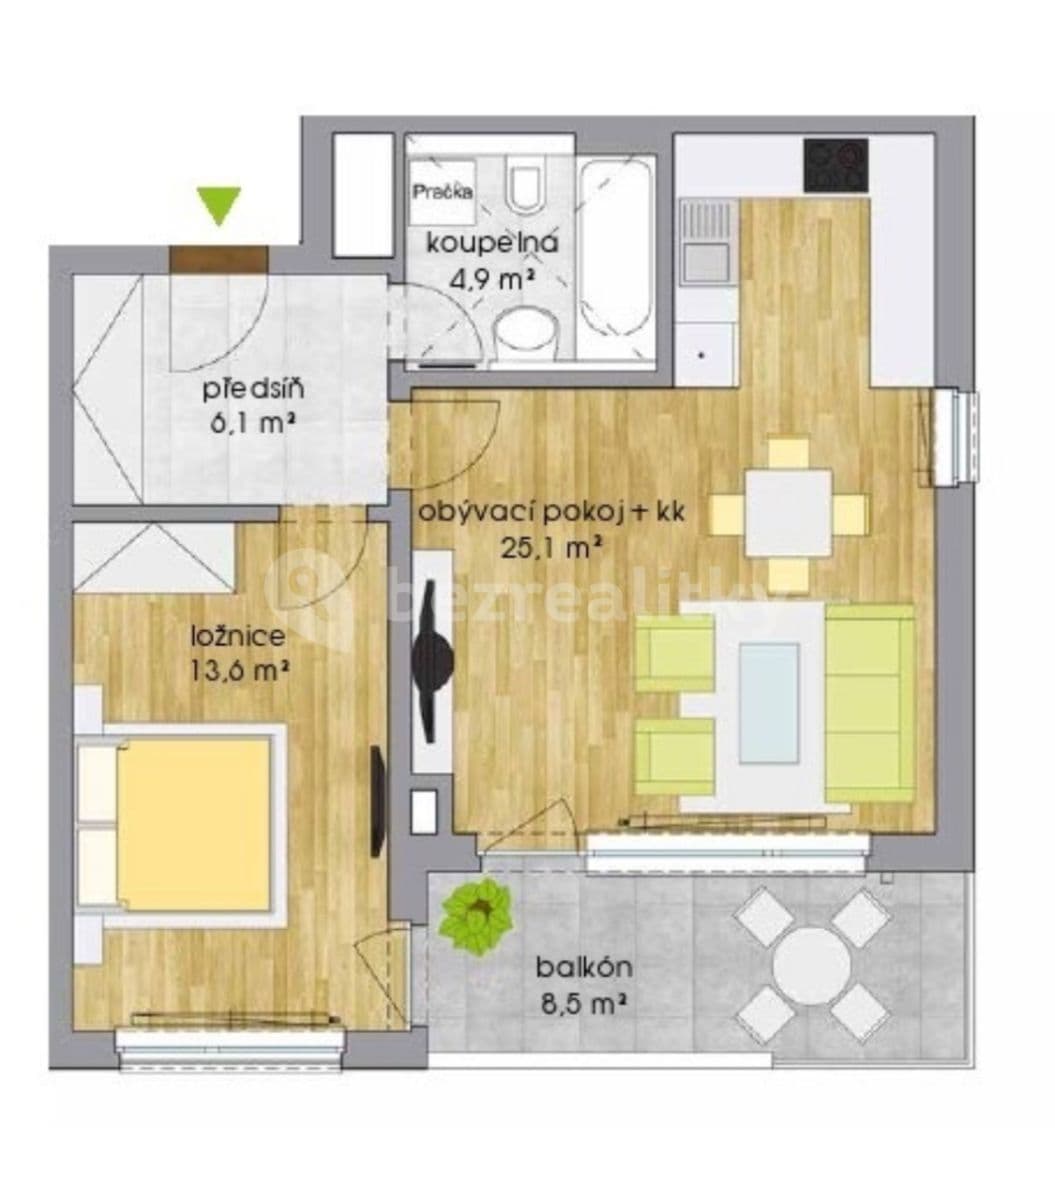 1 bedroom with open-plan kitchen flat to rent, 50 m², Modrého, Prague, Prague